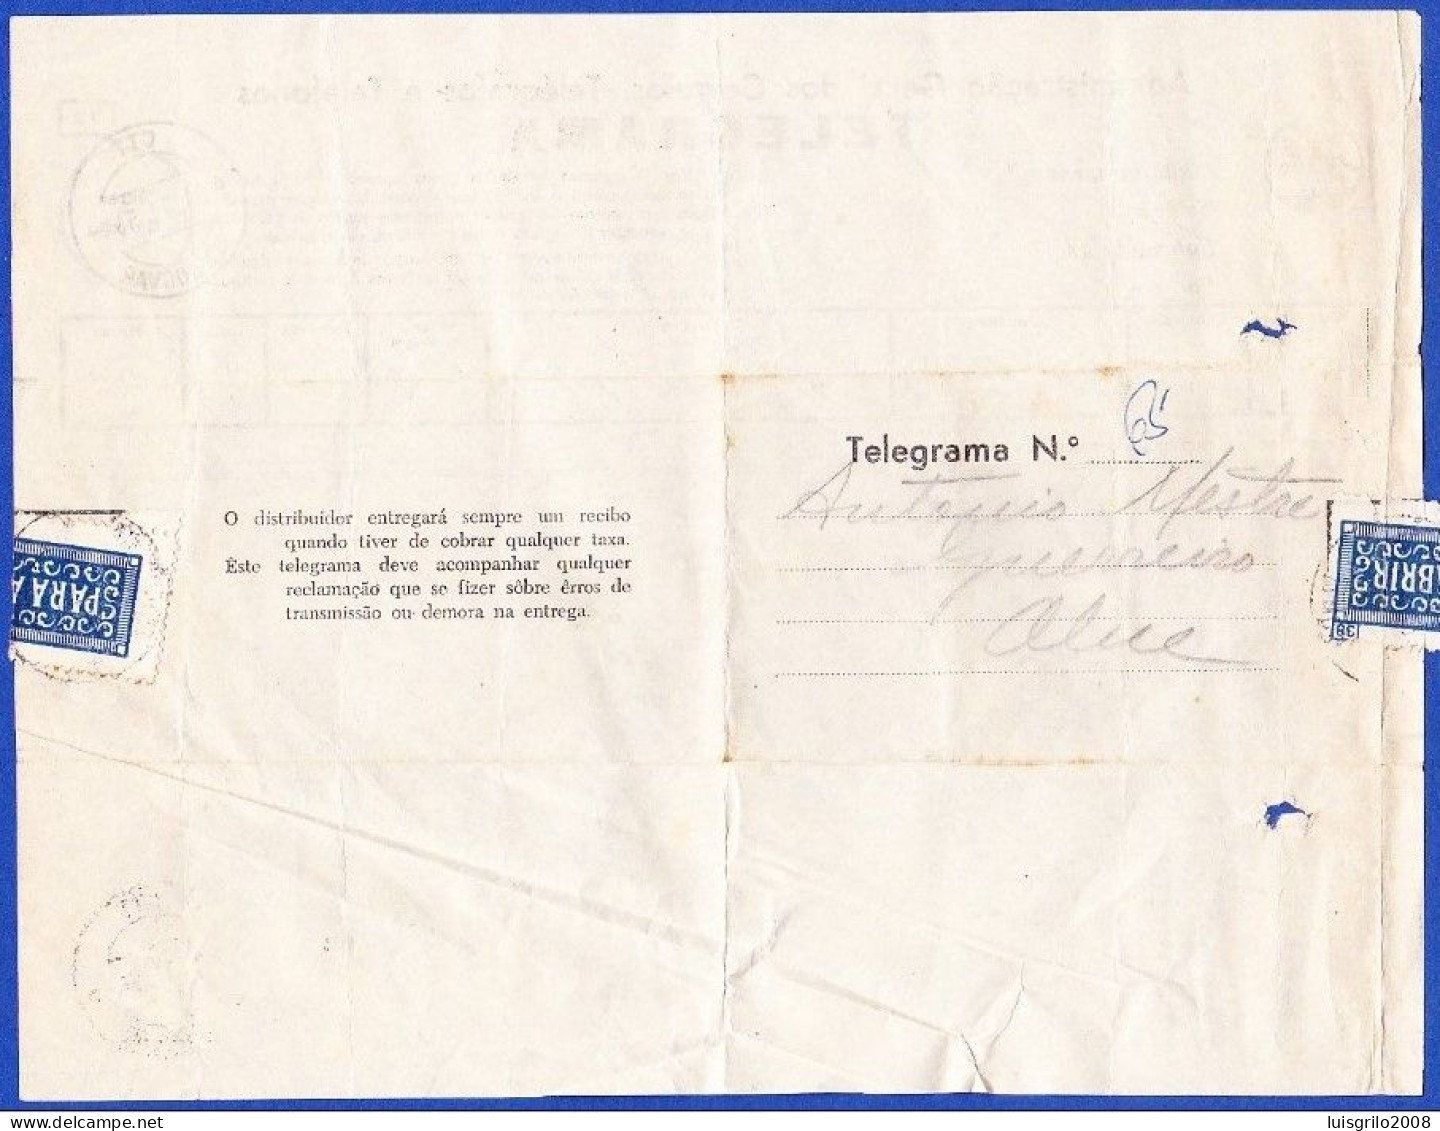 Telegram/ Telegrama - Terreiro Do Paço, Lisboa > Almodovar -|- Postmark - Almodovar. 1958 - Covers & Documents